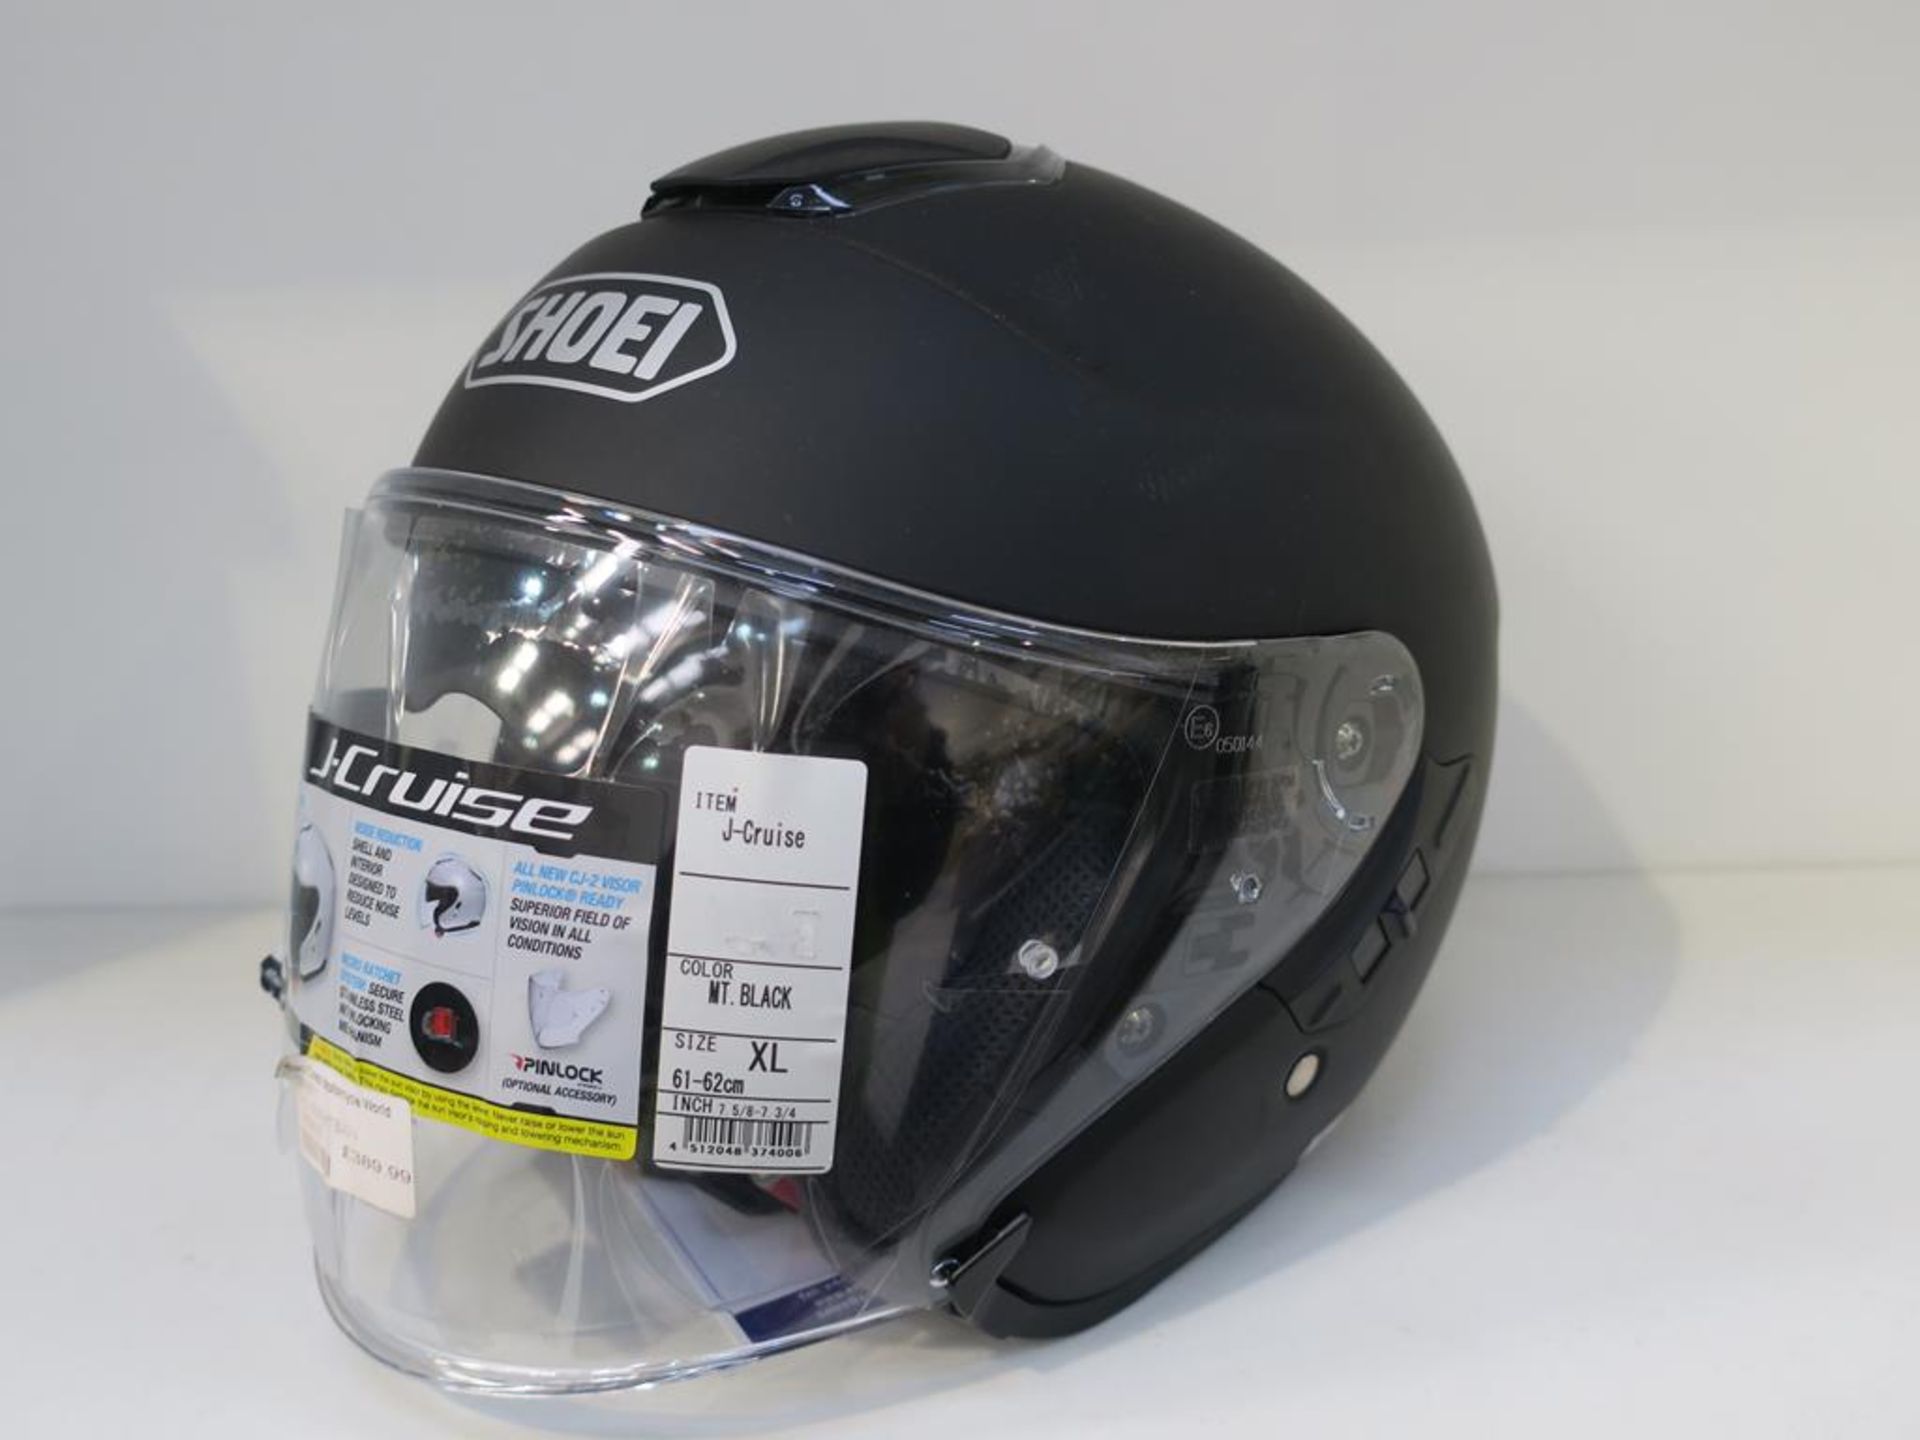 * A Shoei J-Cruise XL Matt Black Helmet (RRP £389.99)